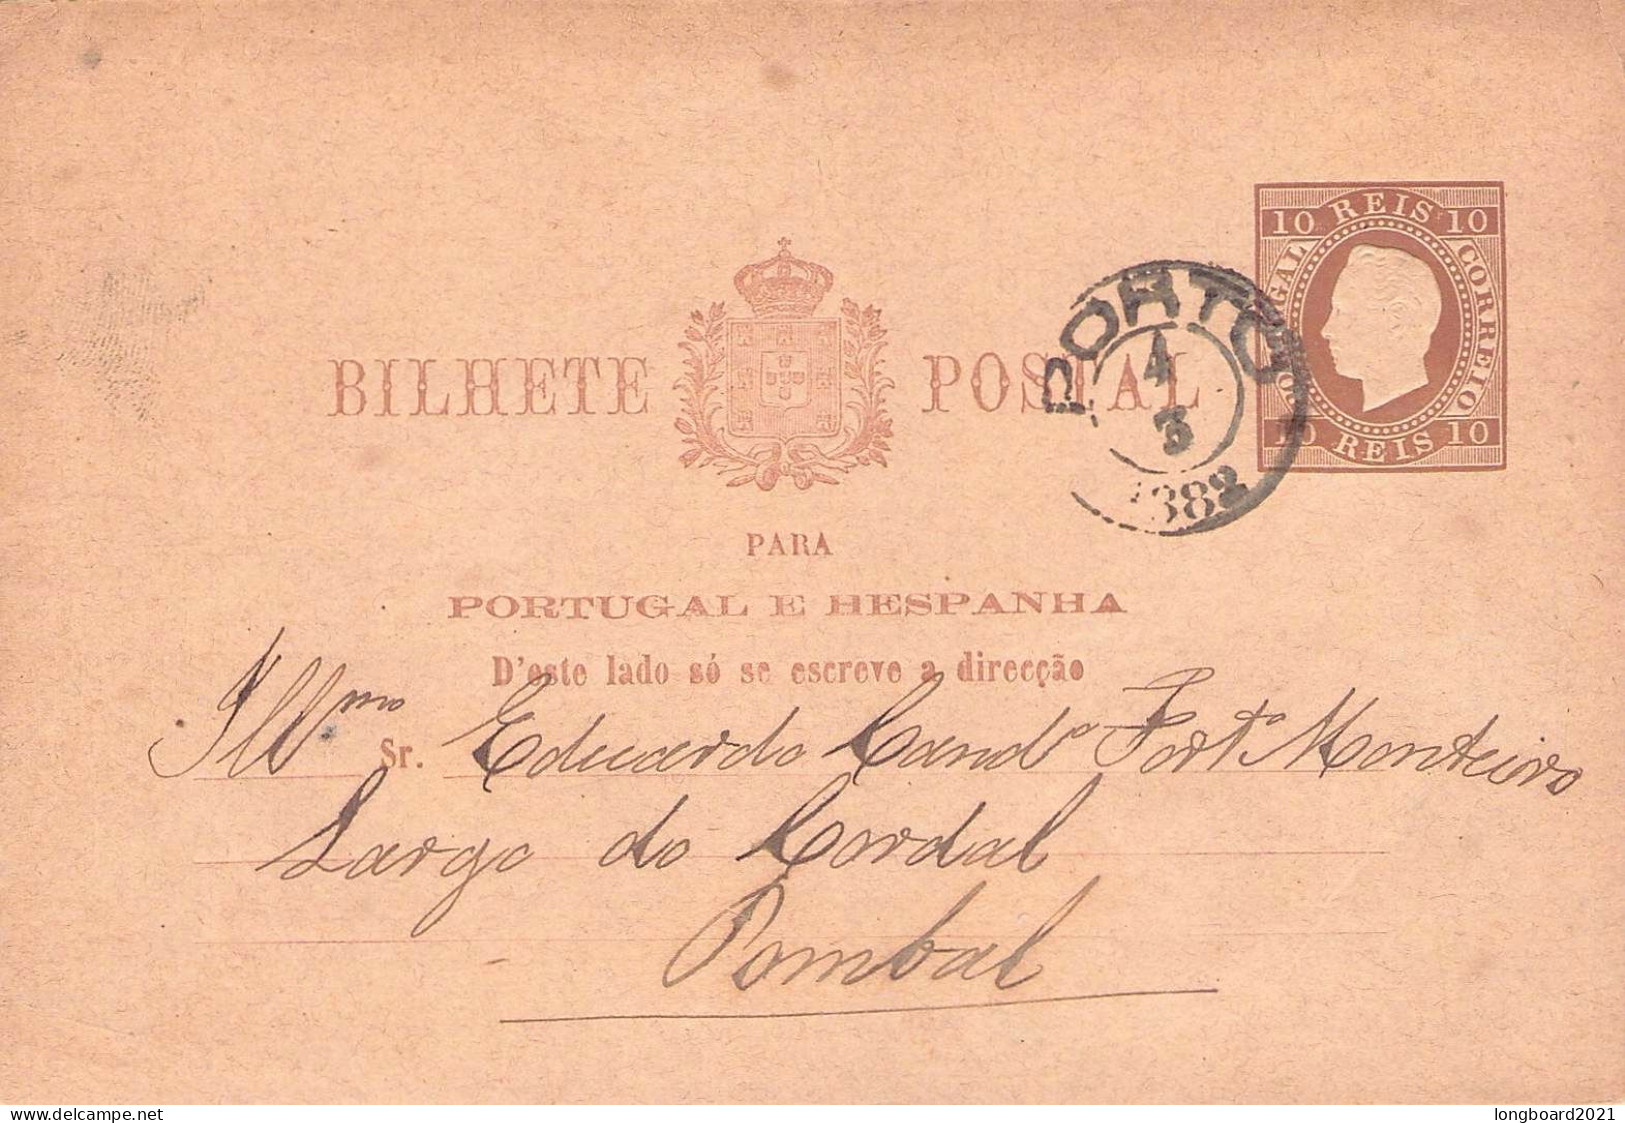 PORTUGAL - BILHETE POSTAL 10 REIS (1882) Mi P7 / *1007 - Ganzsachen